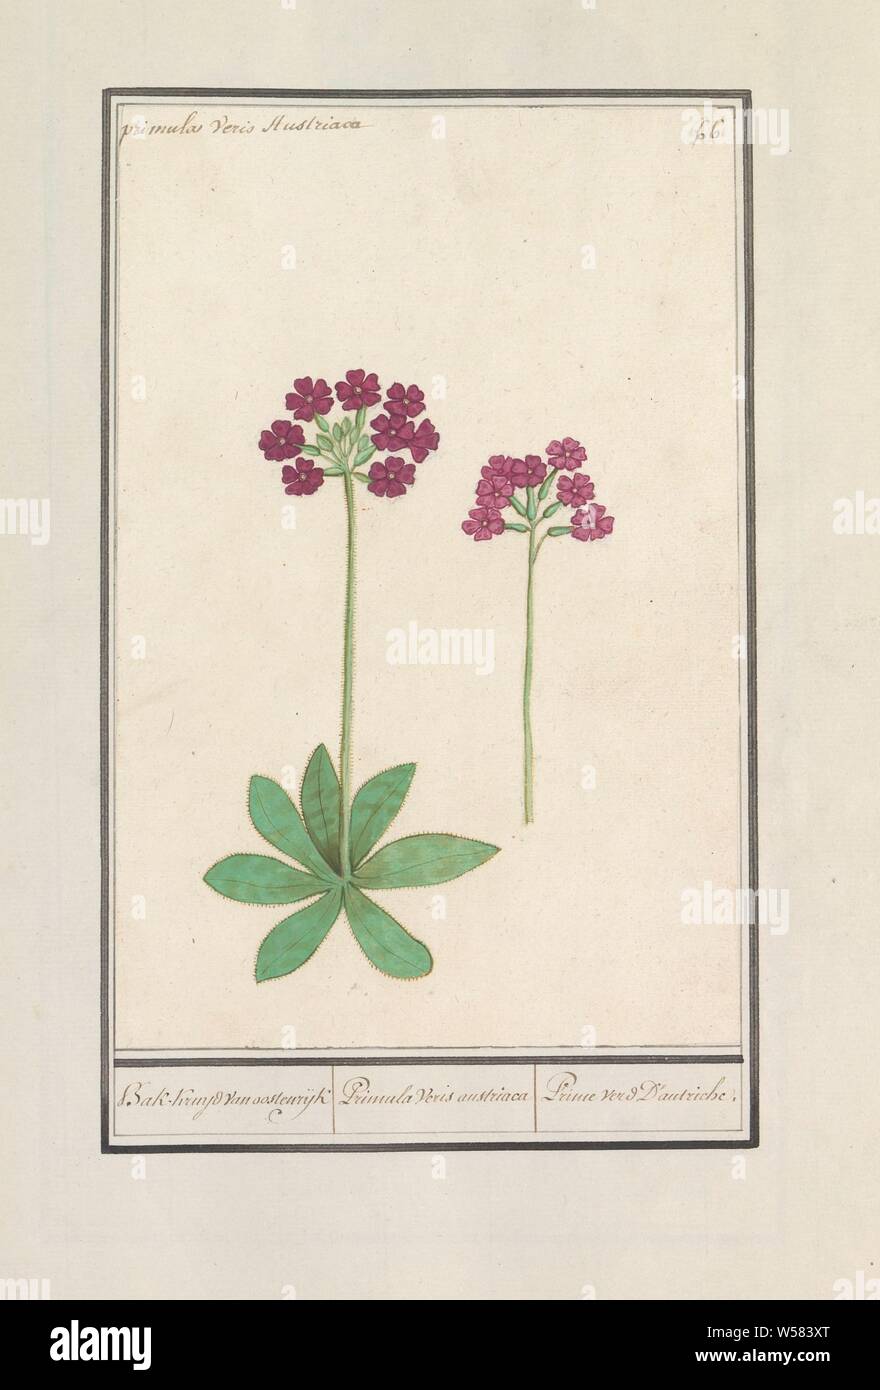 Primrose (Primula), Bak-Kruyd from Austria / Primula Veris austriaca /  Prime verd D ' autriche. (title on object), Primrose (Primula) with dark  pink flowers. Numbered top right: 66. Top left the Latin